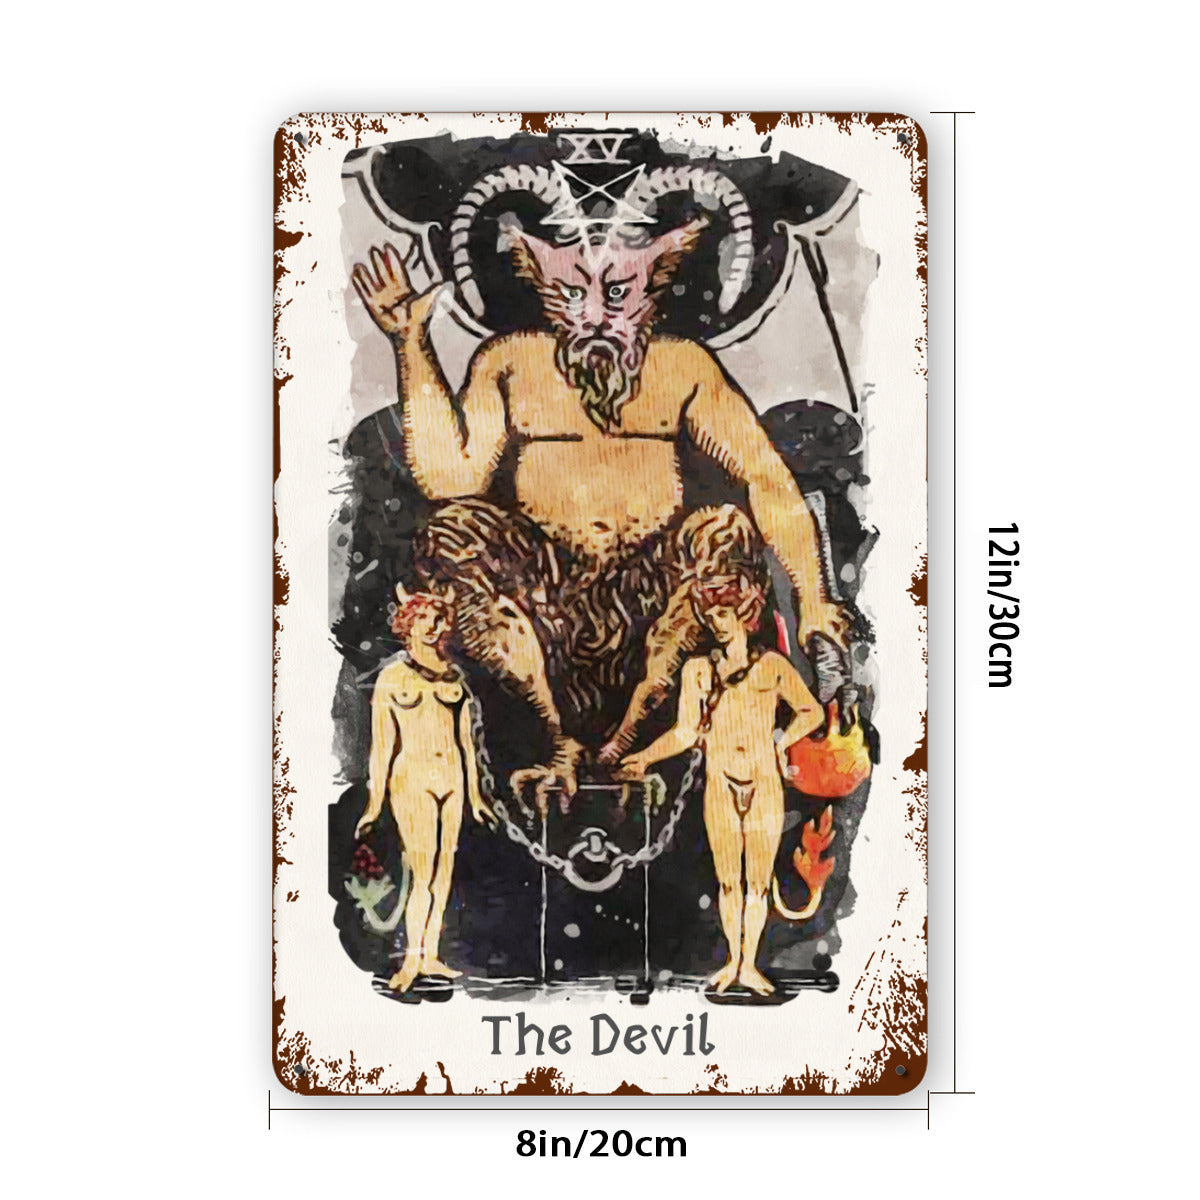 Tin Sign Of The Devil Tarot Card Painting • Major Arcana Waite-Style Cards Vintage Metal Print • Apollo Tarot Design Shop